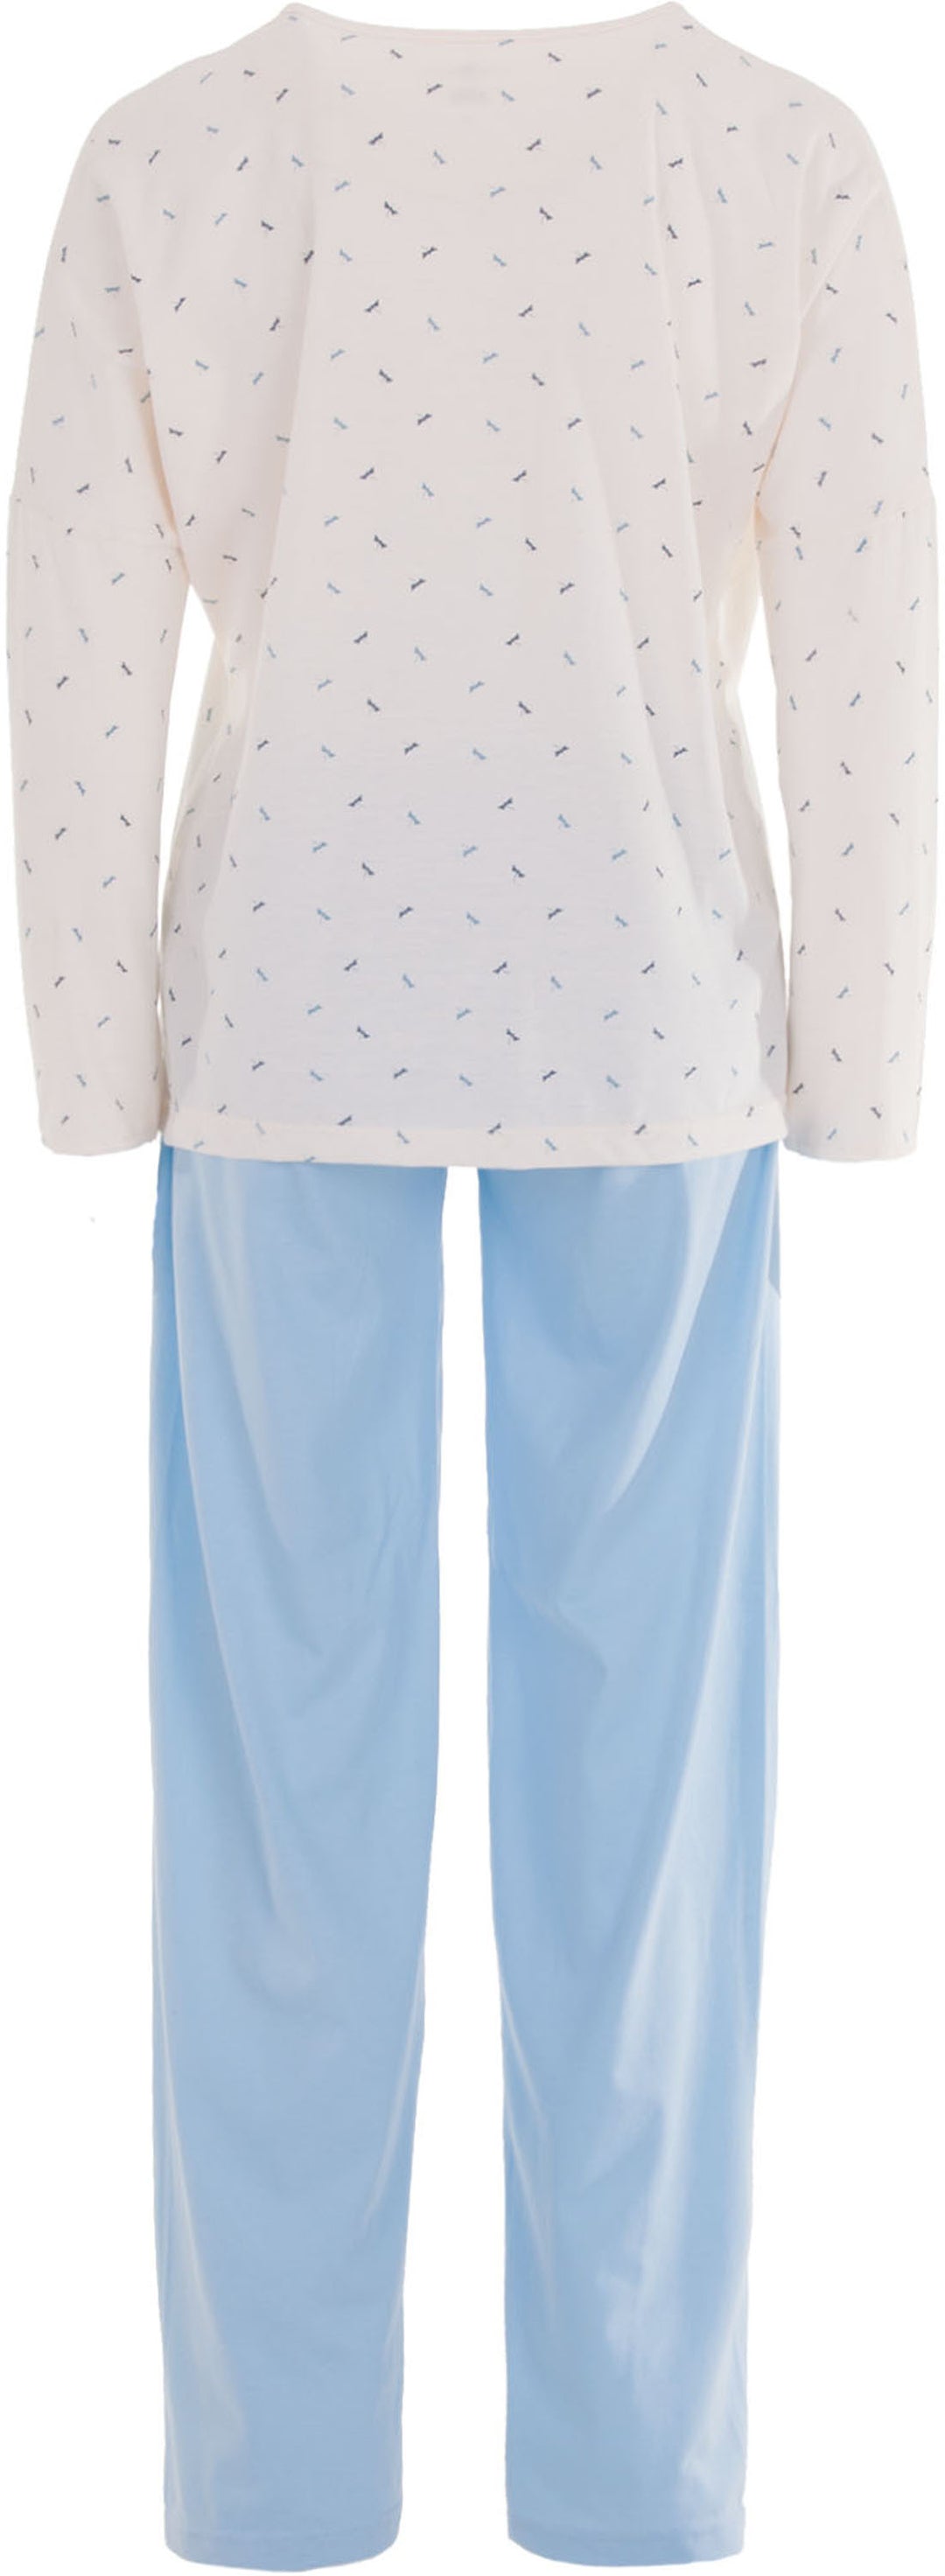 Pajama Set Long Sleeve - Dragonfly